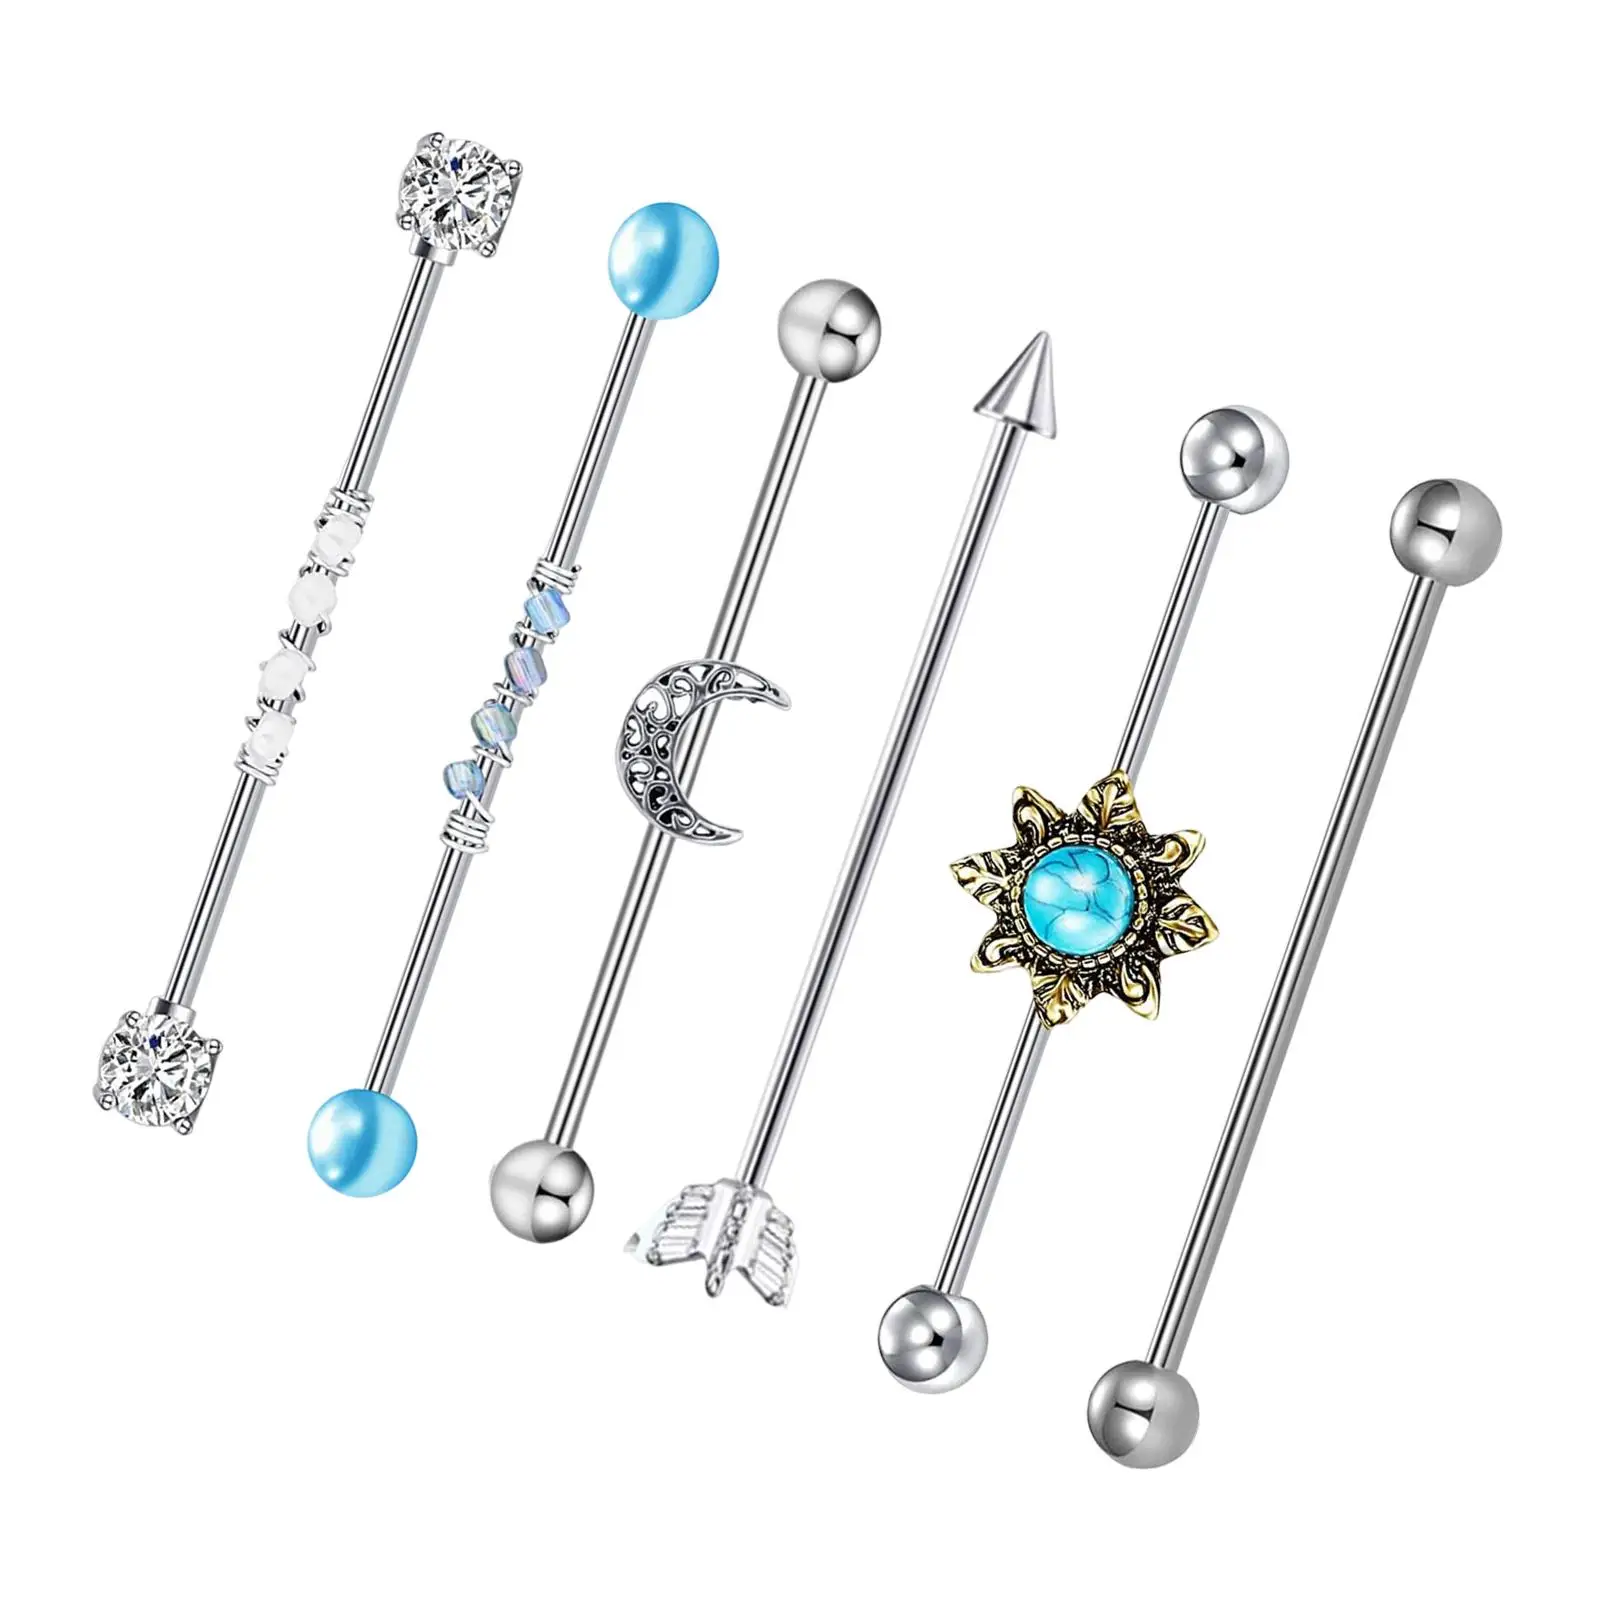 6Pcs Industrial Barbell Earrings Cartilage Body Piercing Jewelry Long 38mm 1 1/2inch Stylish Industrial Piercing Bar for Girls